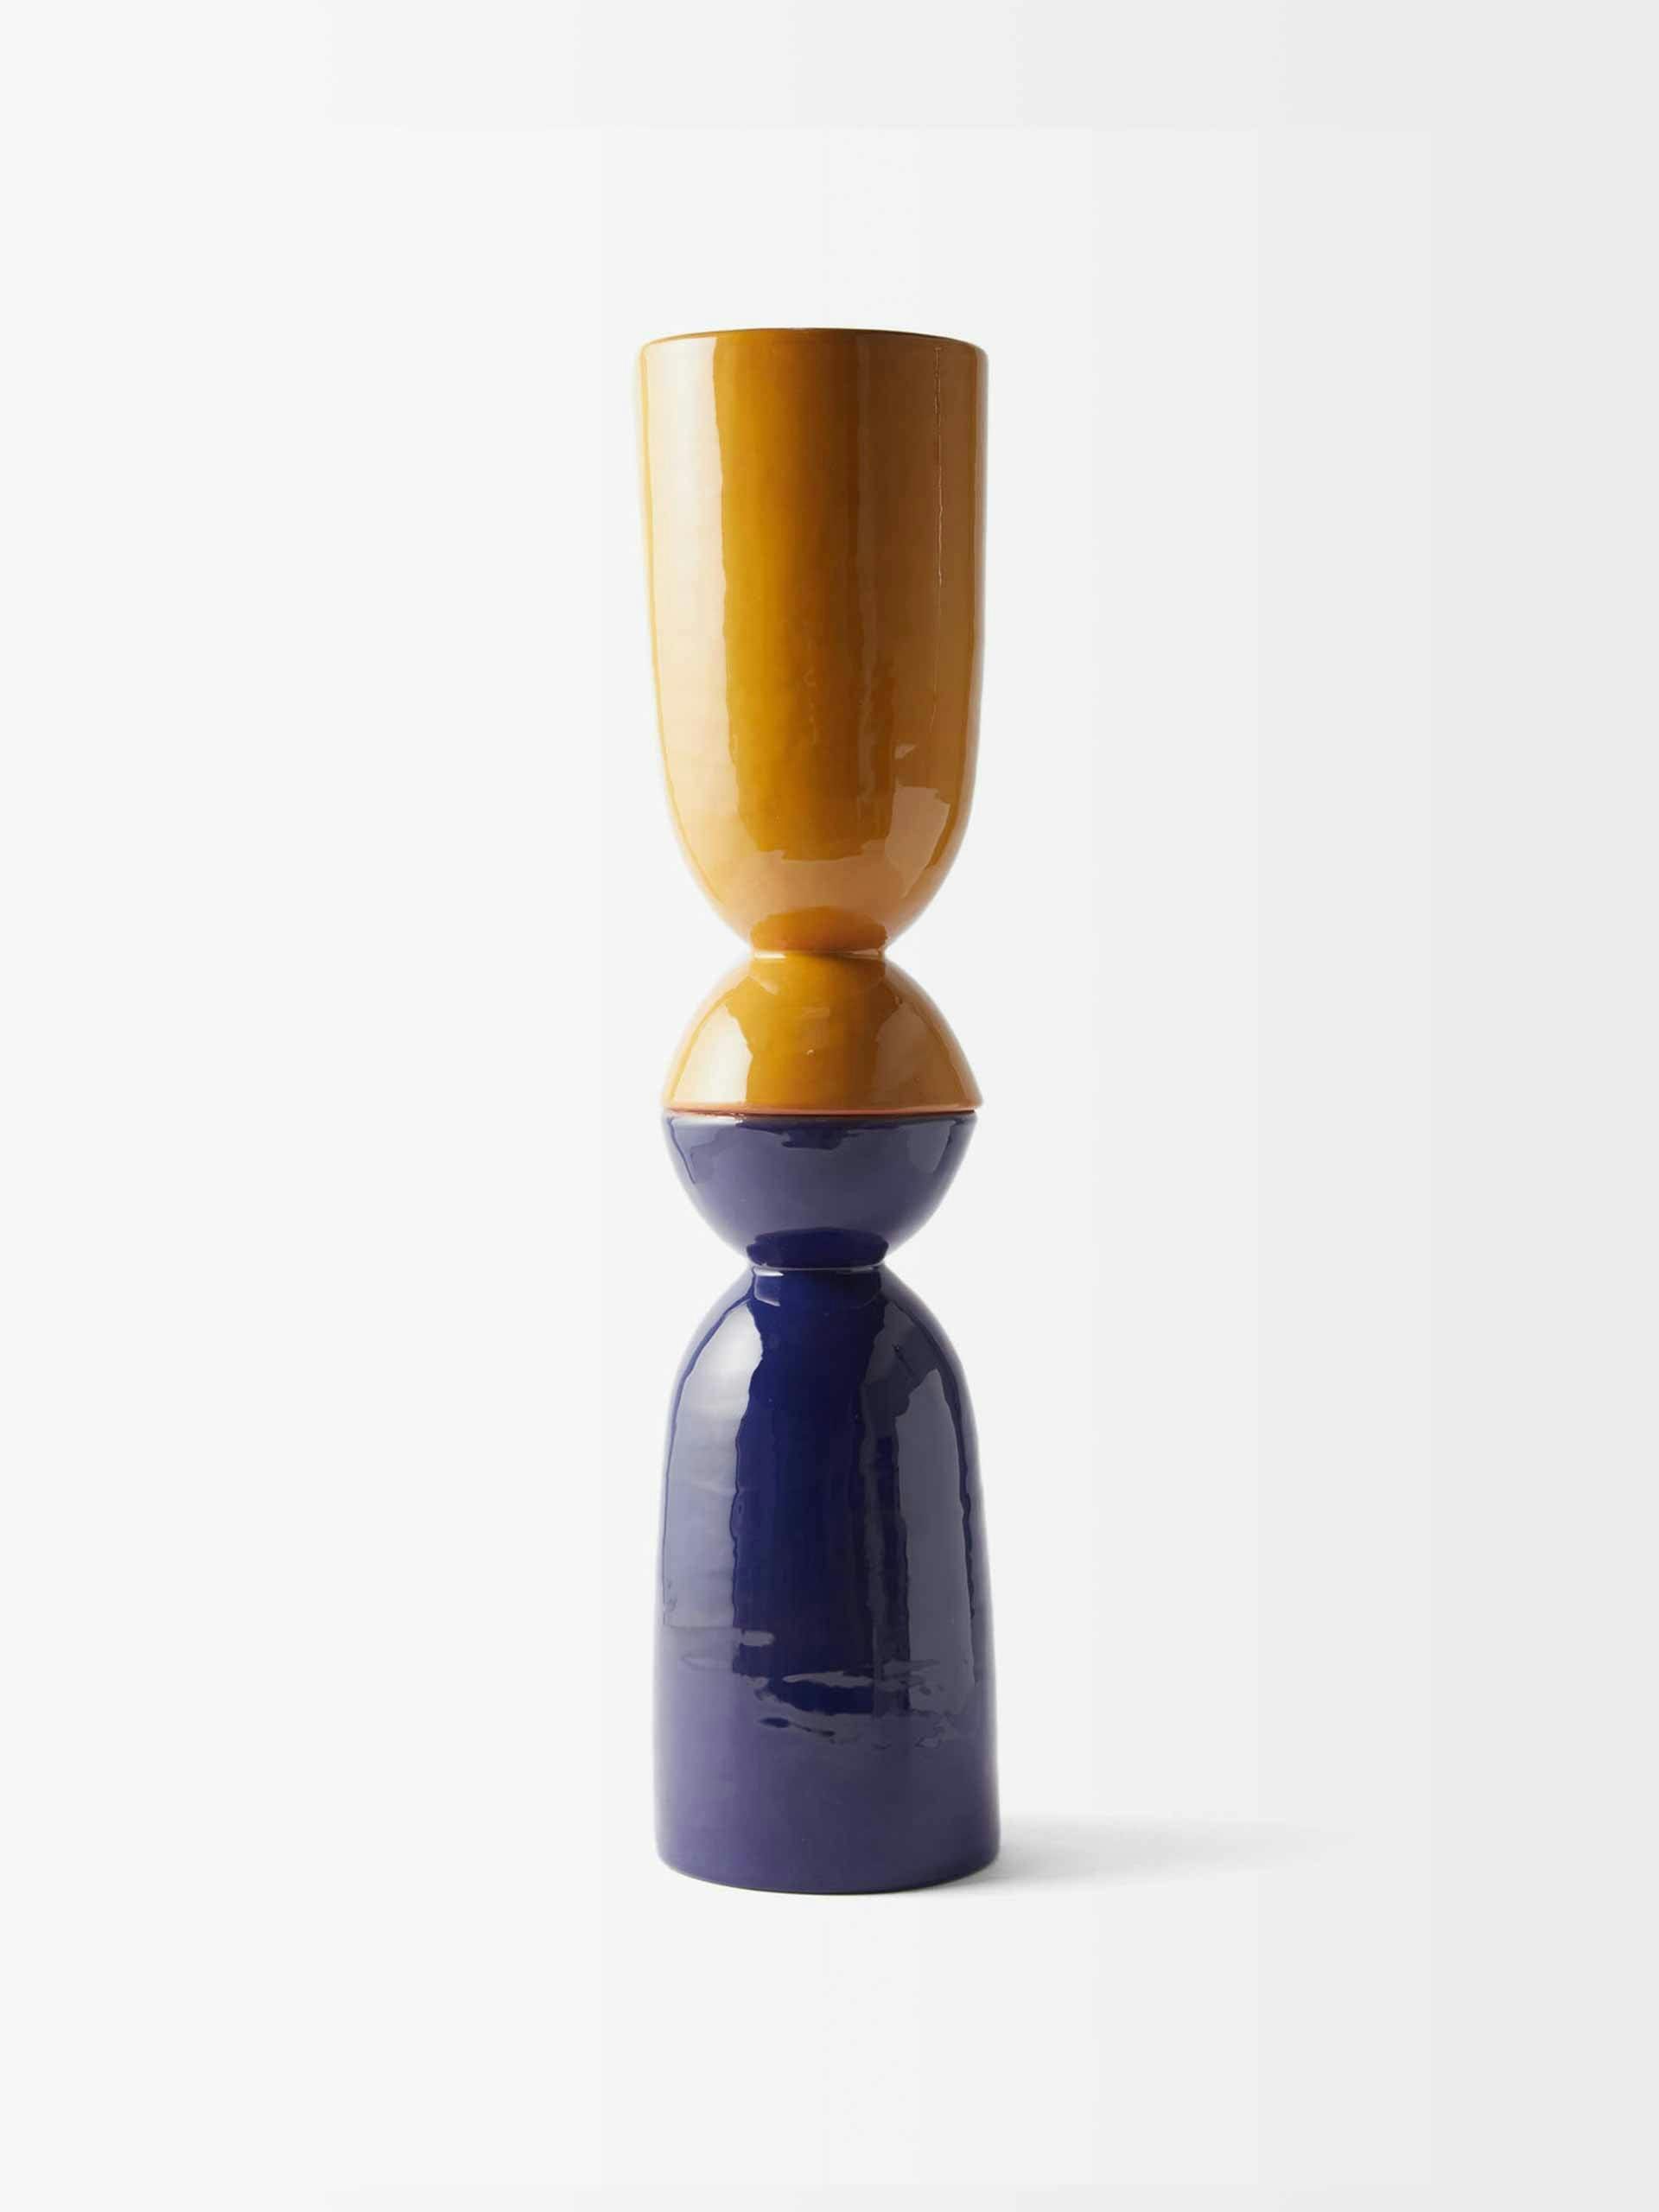 Double ceramic vase